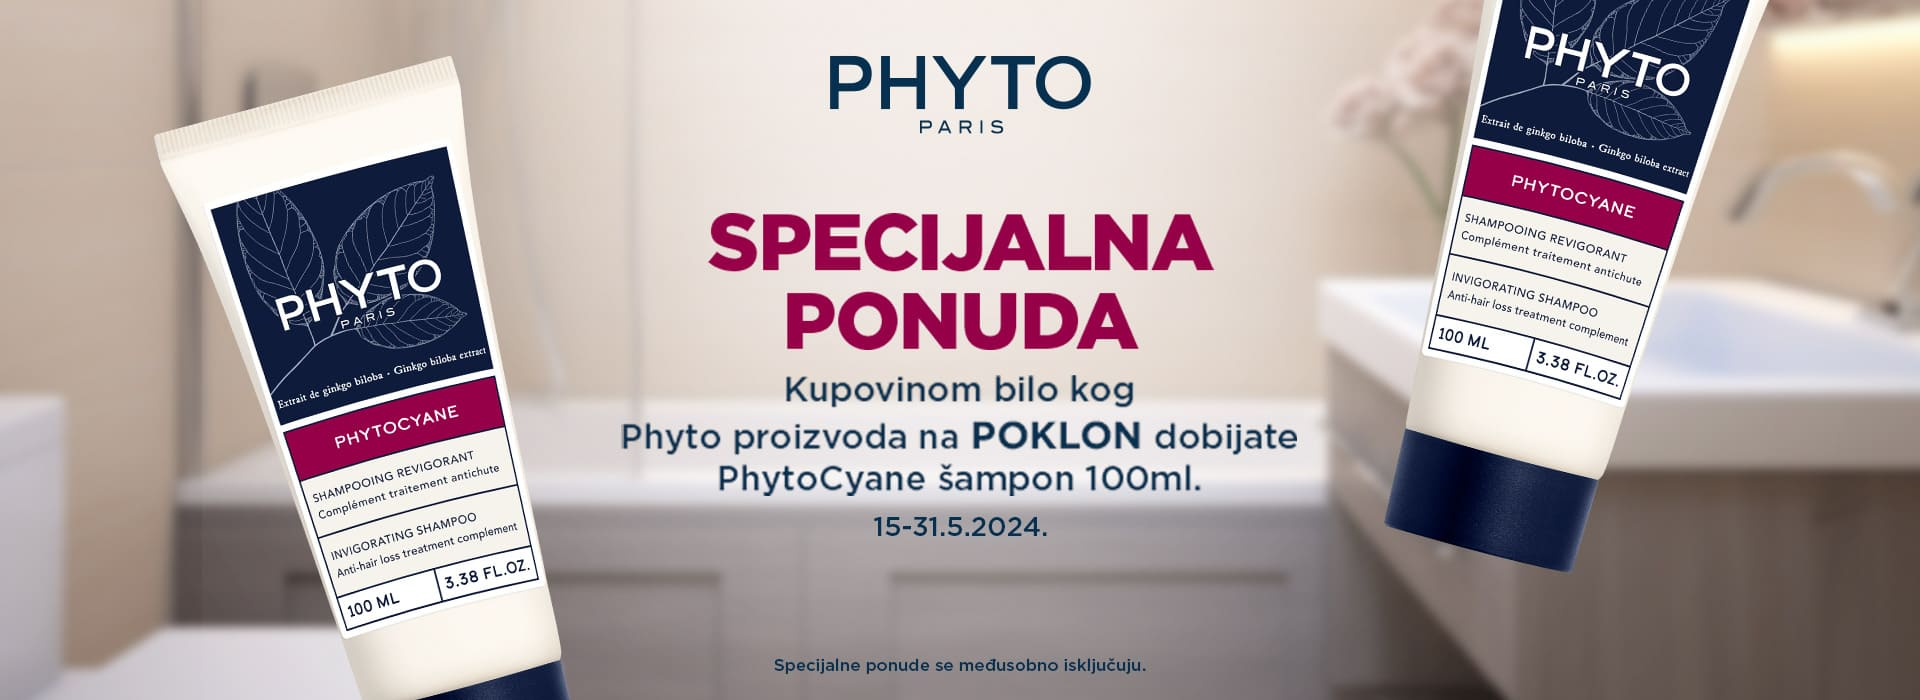 Phyto poklon 05/24